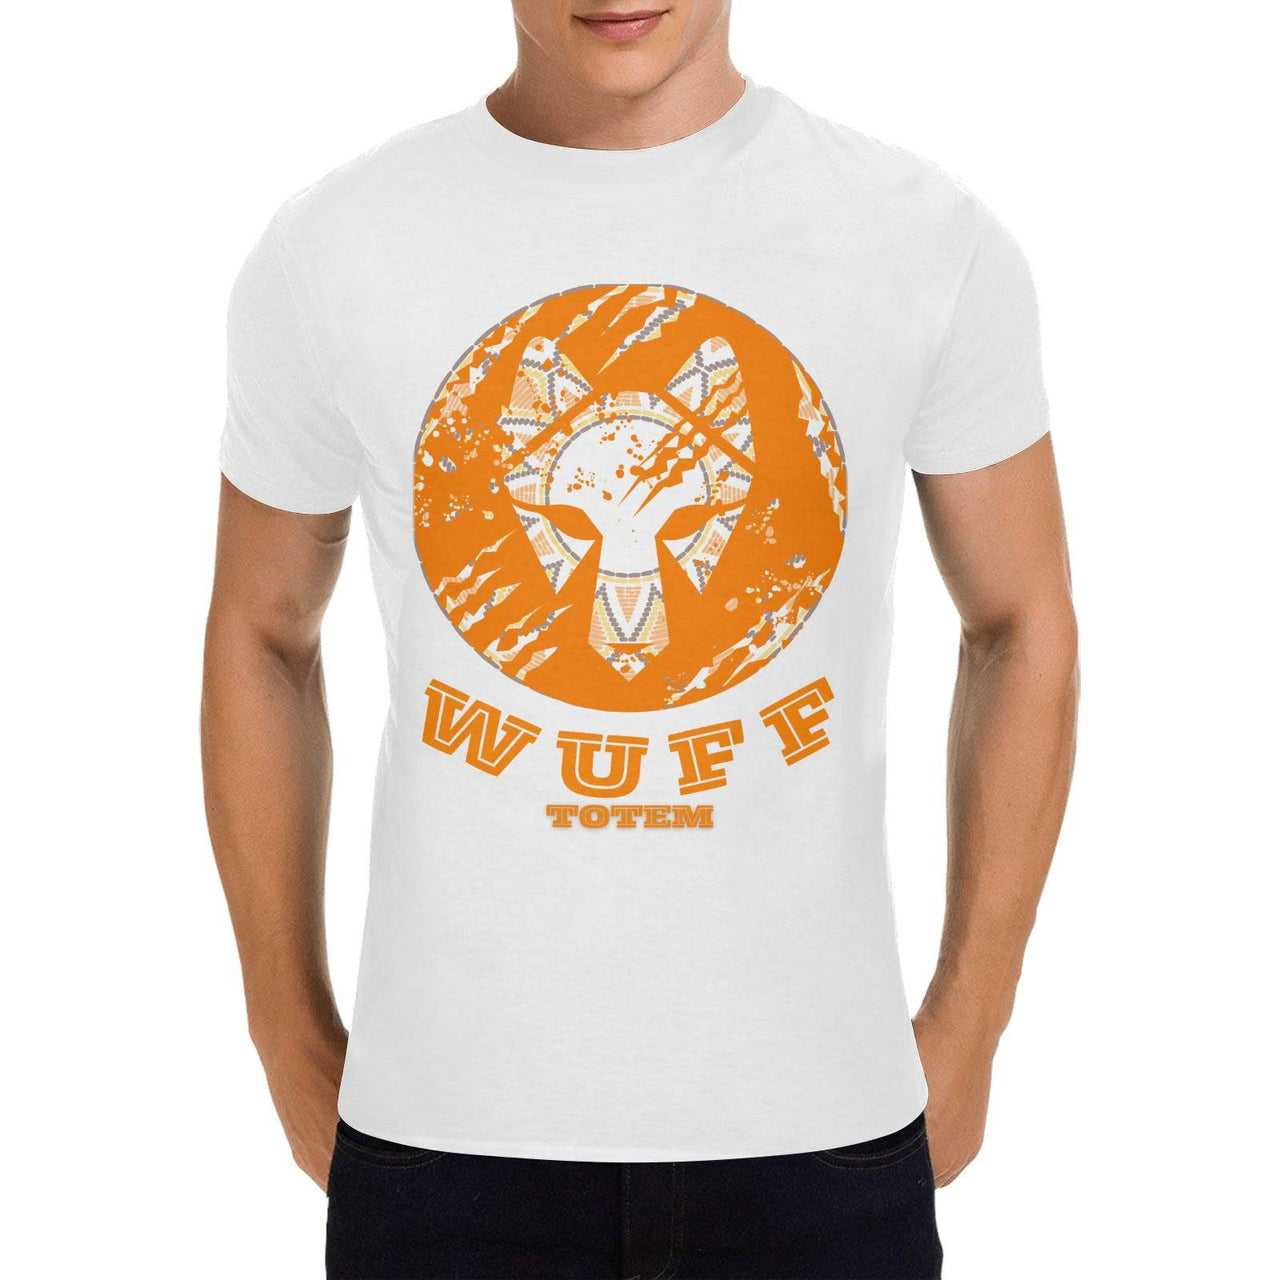 Wuff Totem Animal Tee Shirt Short Sleeve - FIHEROE.